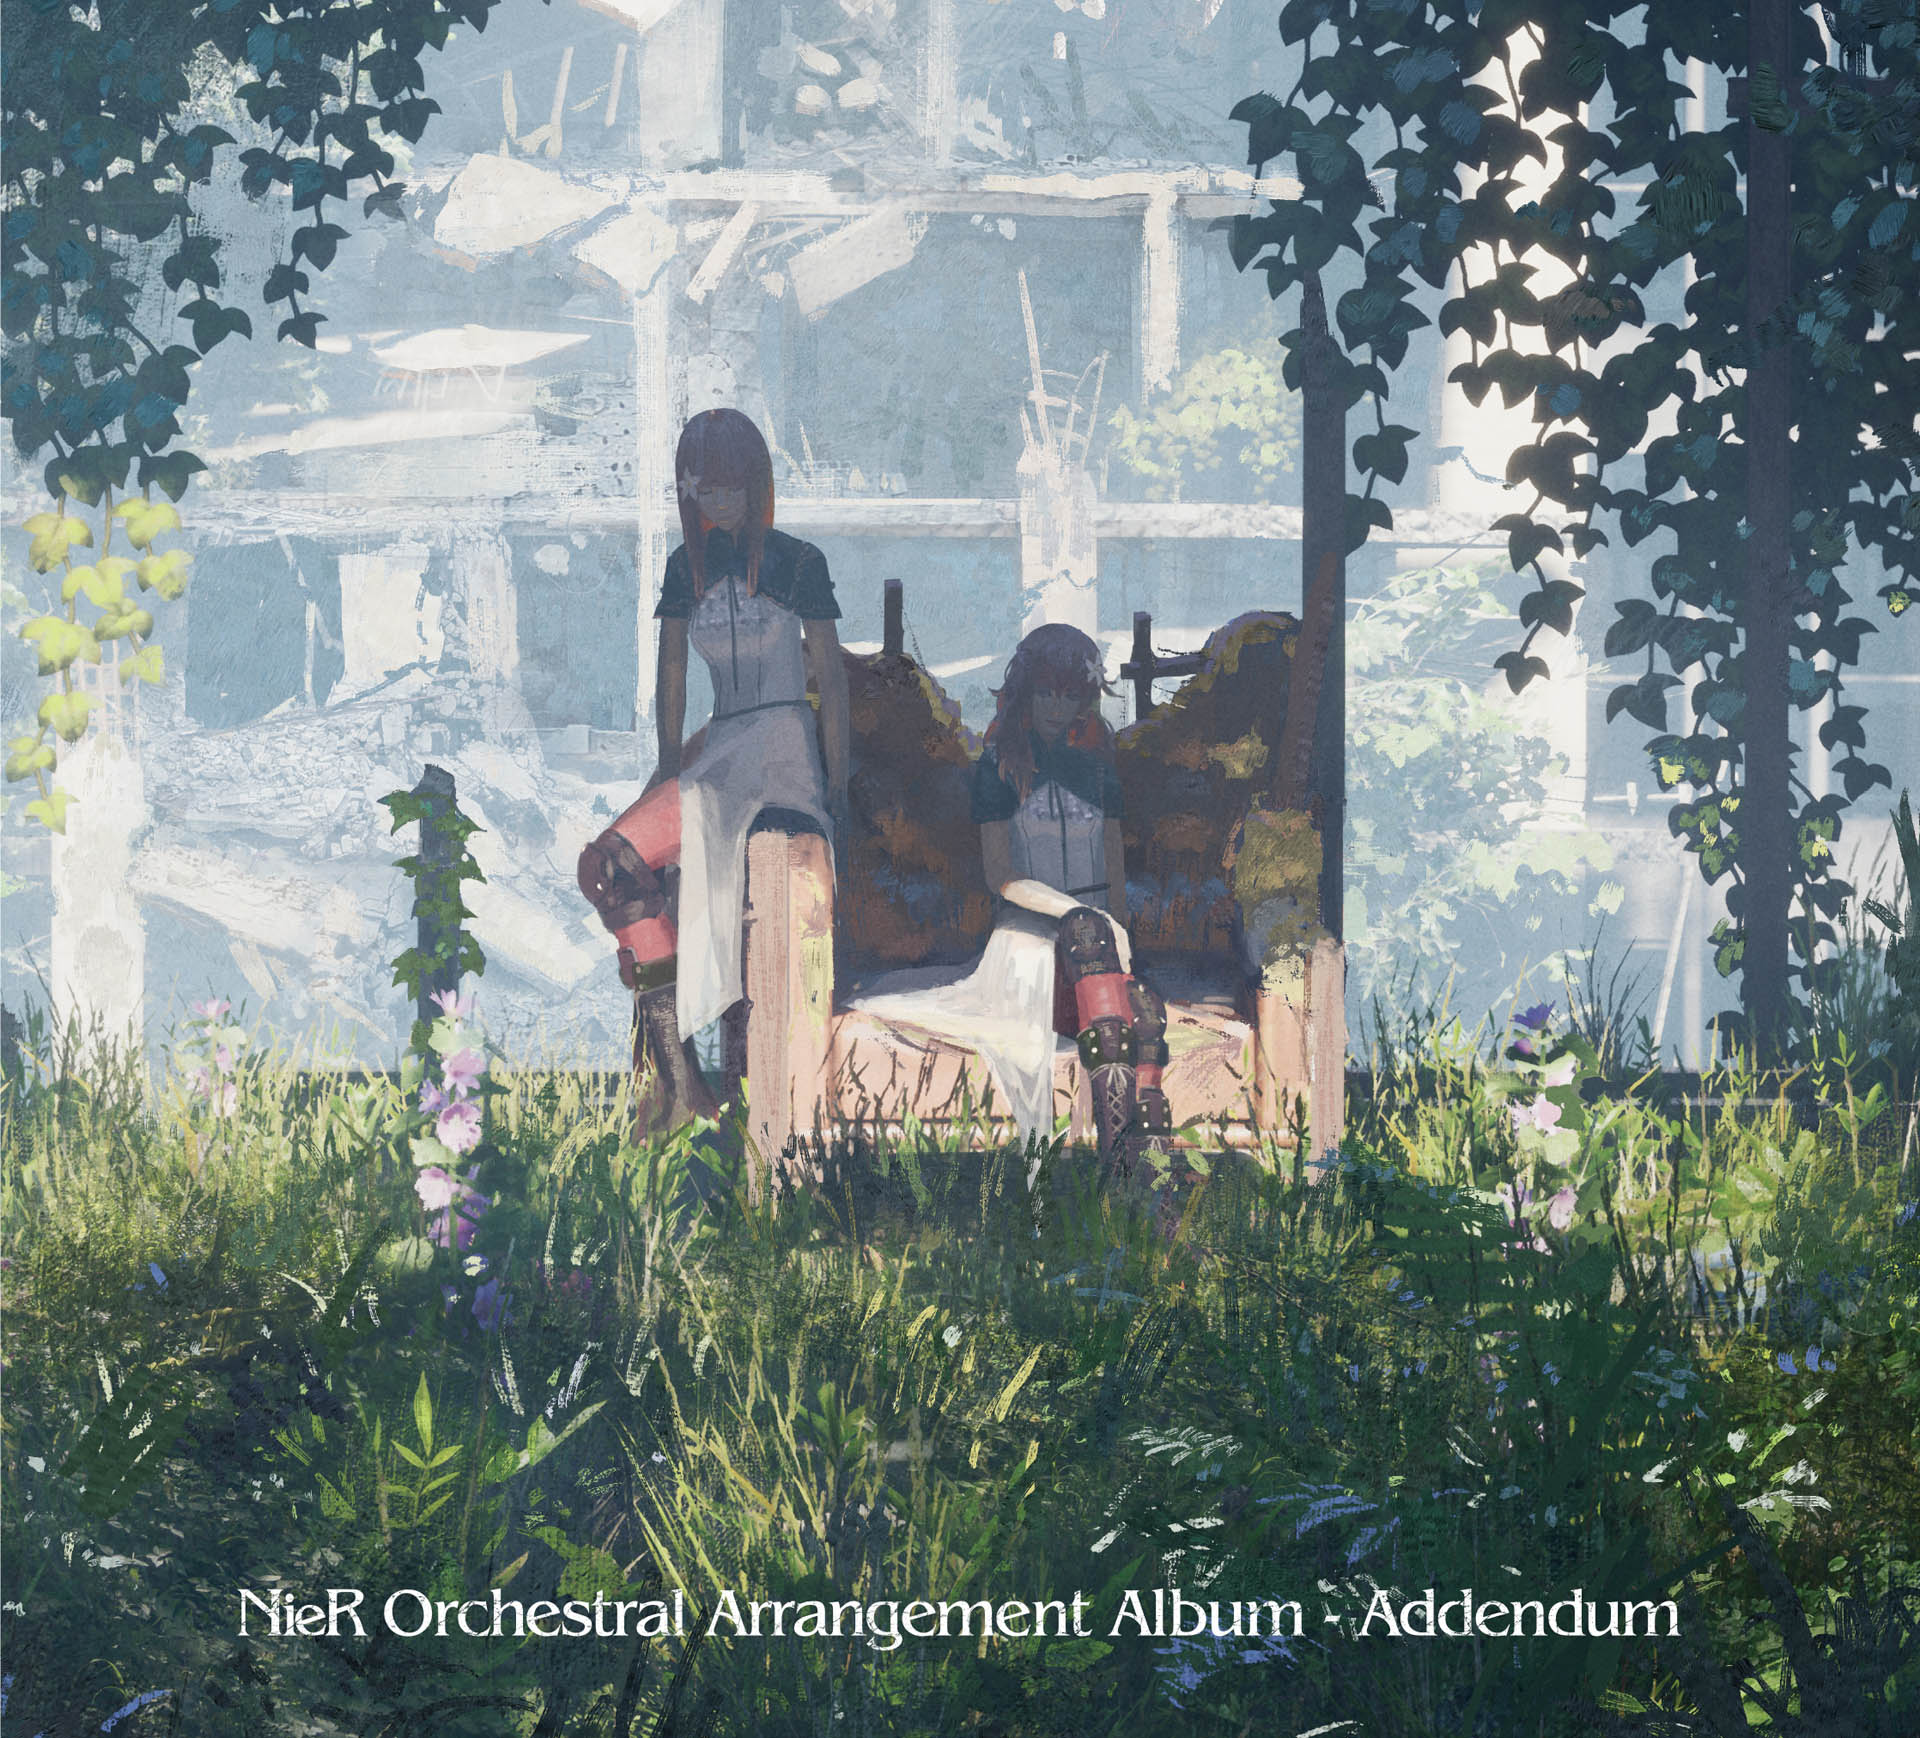 Nier シリーズの楽曲のオーケストラアレンジを収録したアルバム Nier Orchestral Arrangement Album Adde Ndum が本日発売